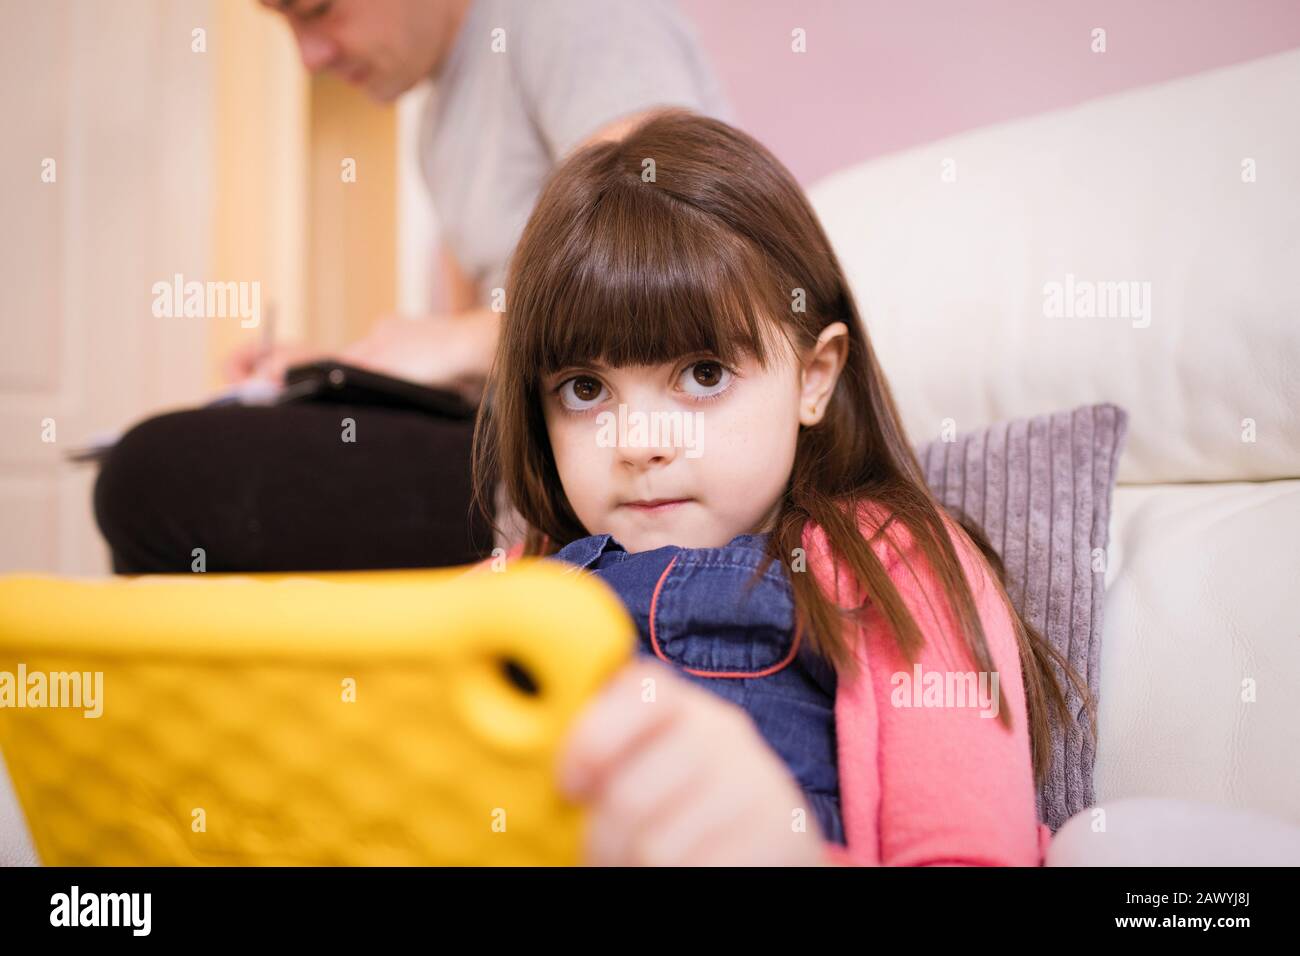 Portrait innocent girl using digital tablet on sofa Stock Photo